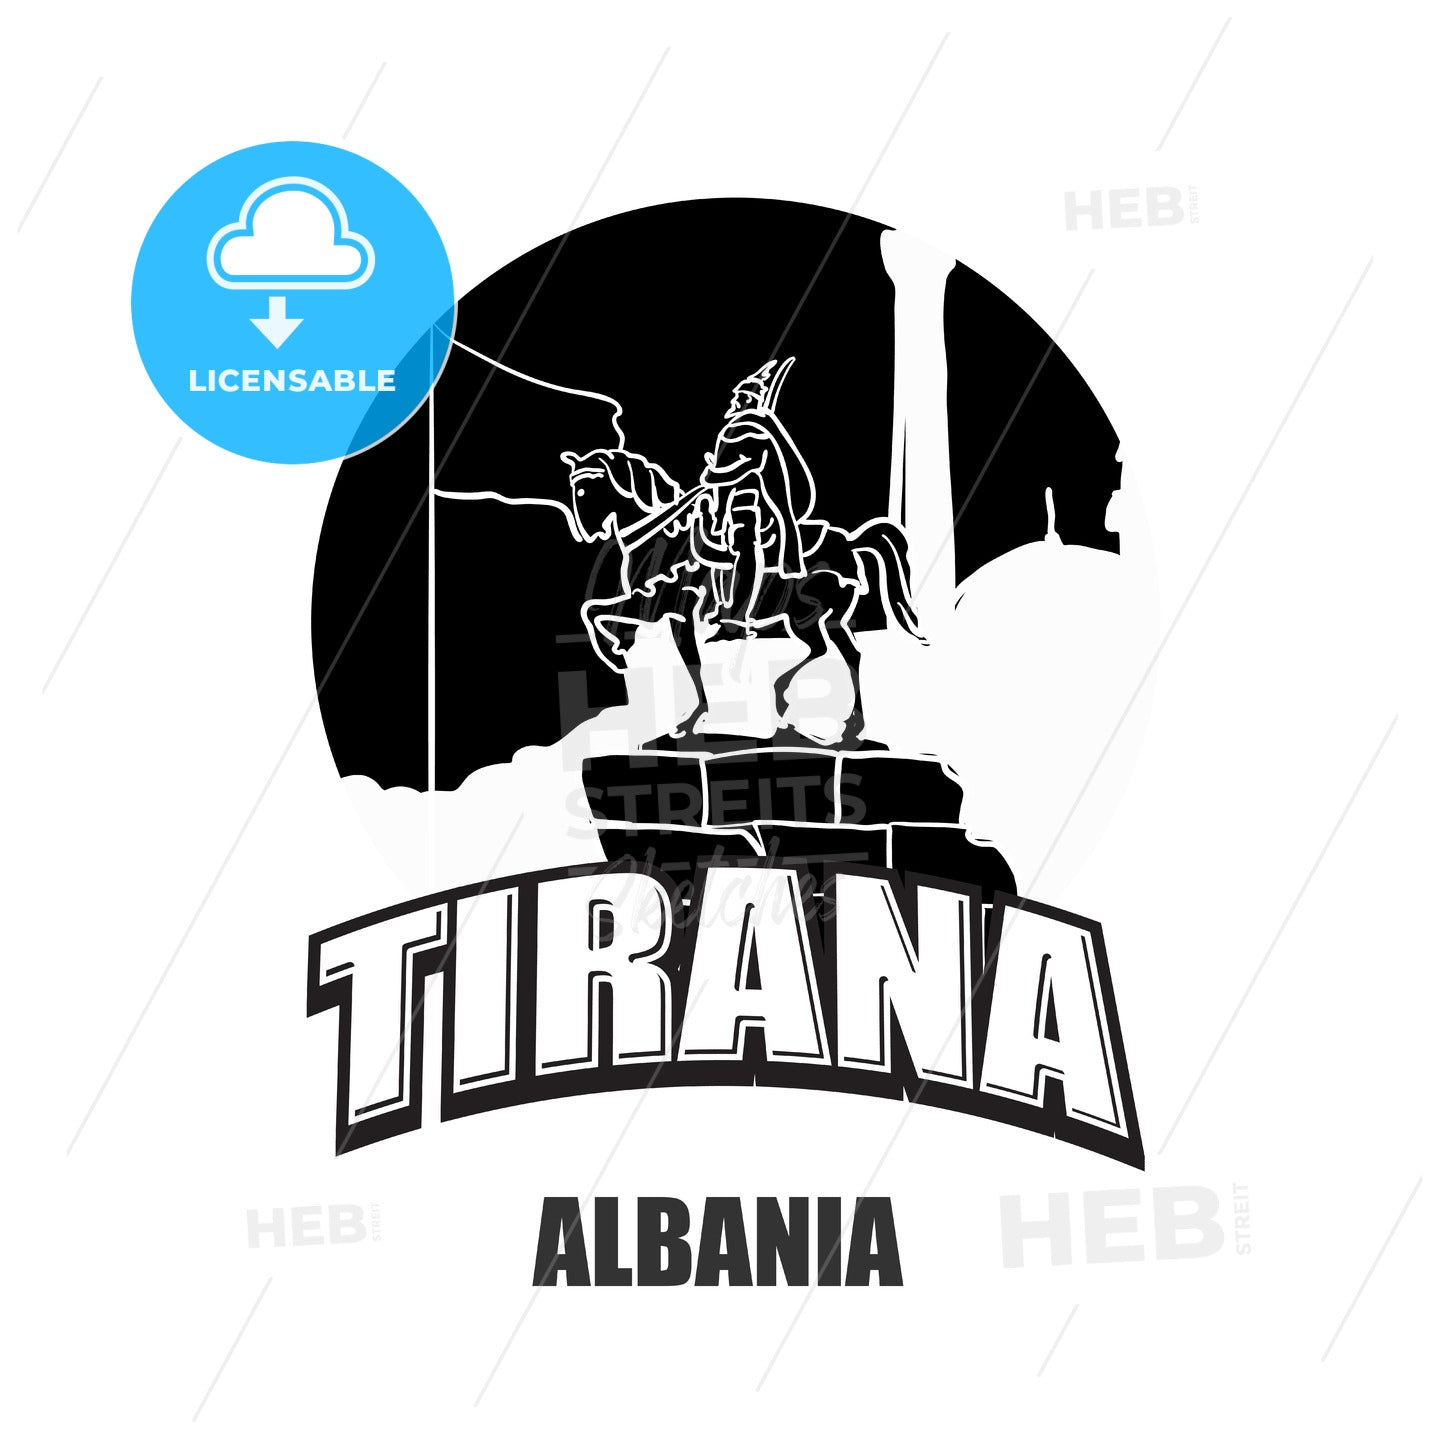 Tirana, Albania black and white logo – instant download